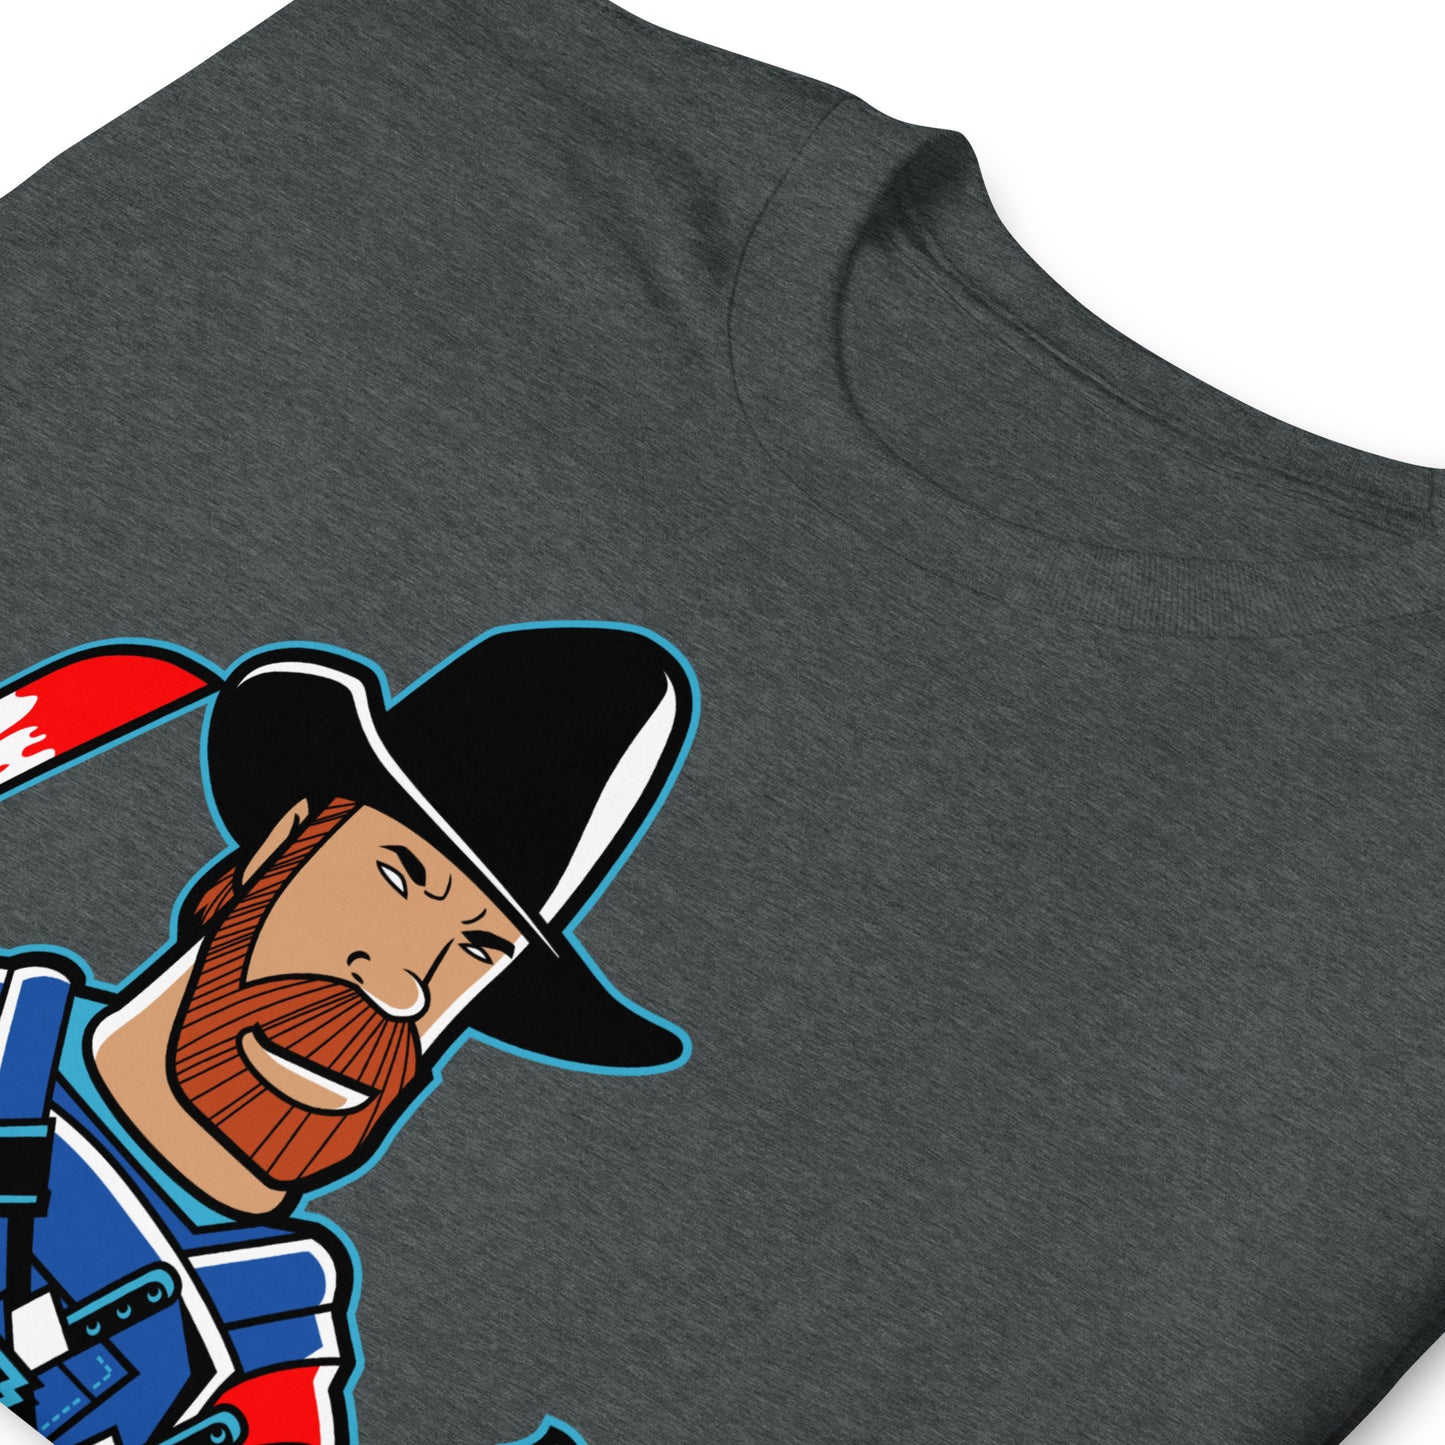 Chucky Norris, Chuck Norris, pop Culture Unisex T-Shirt